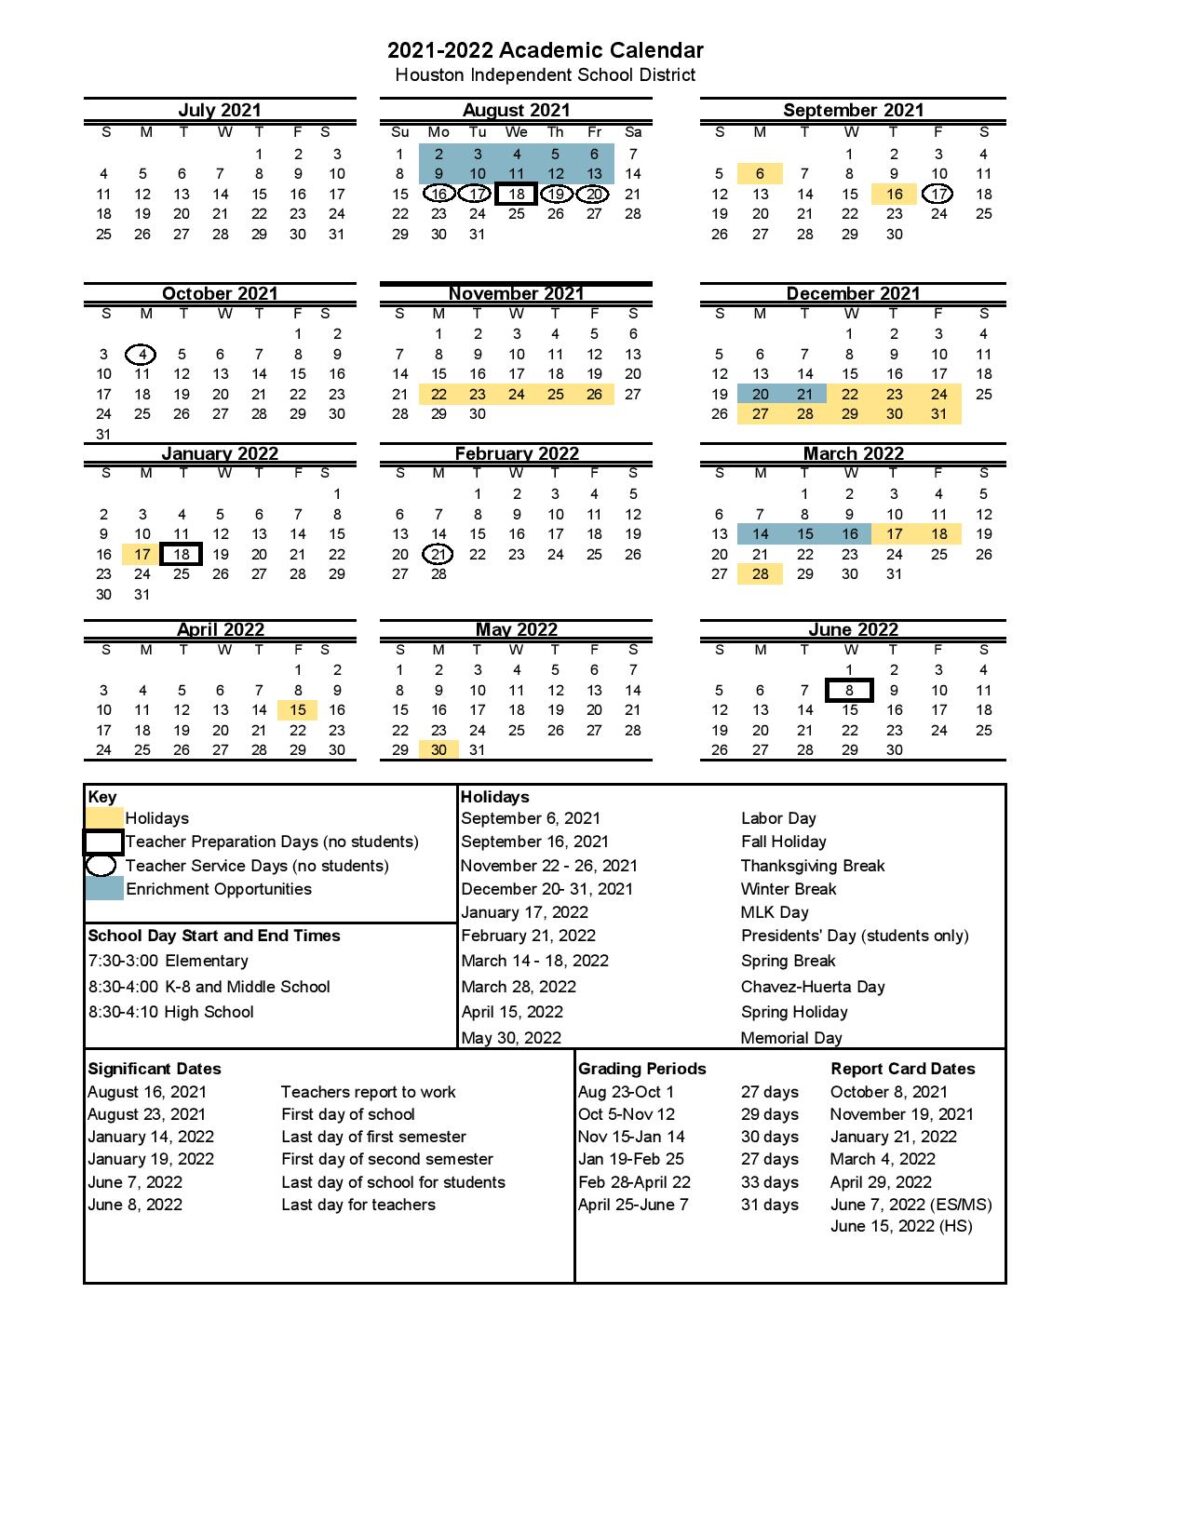 Houston Independent School District Calendar 20212022